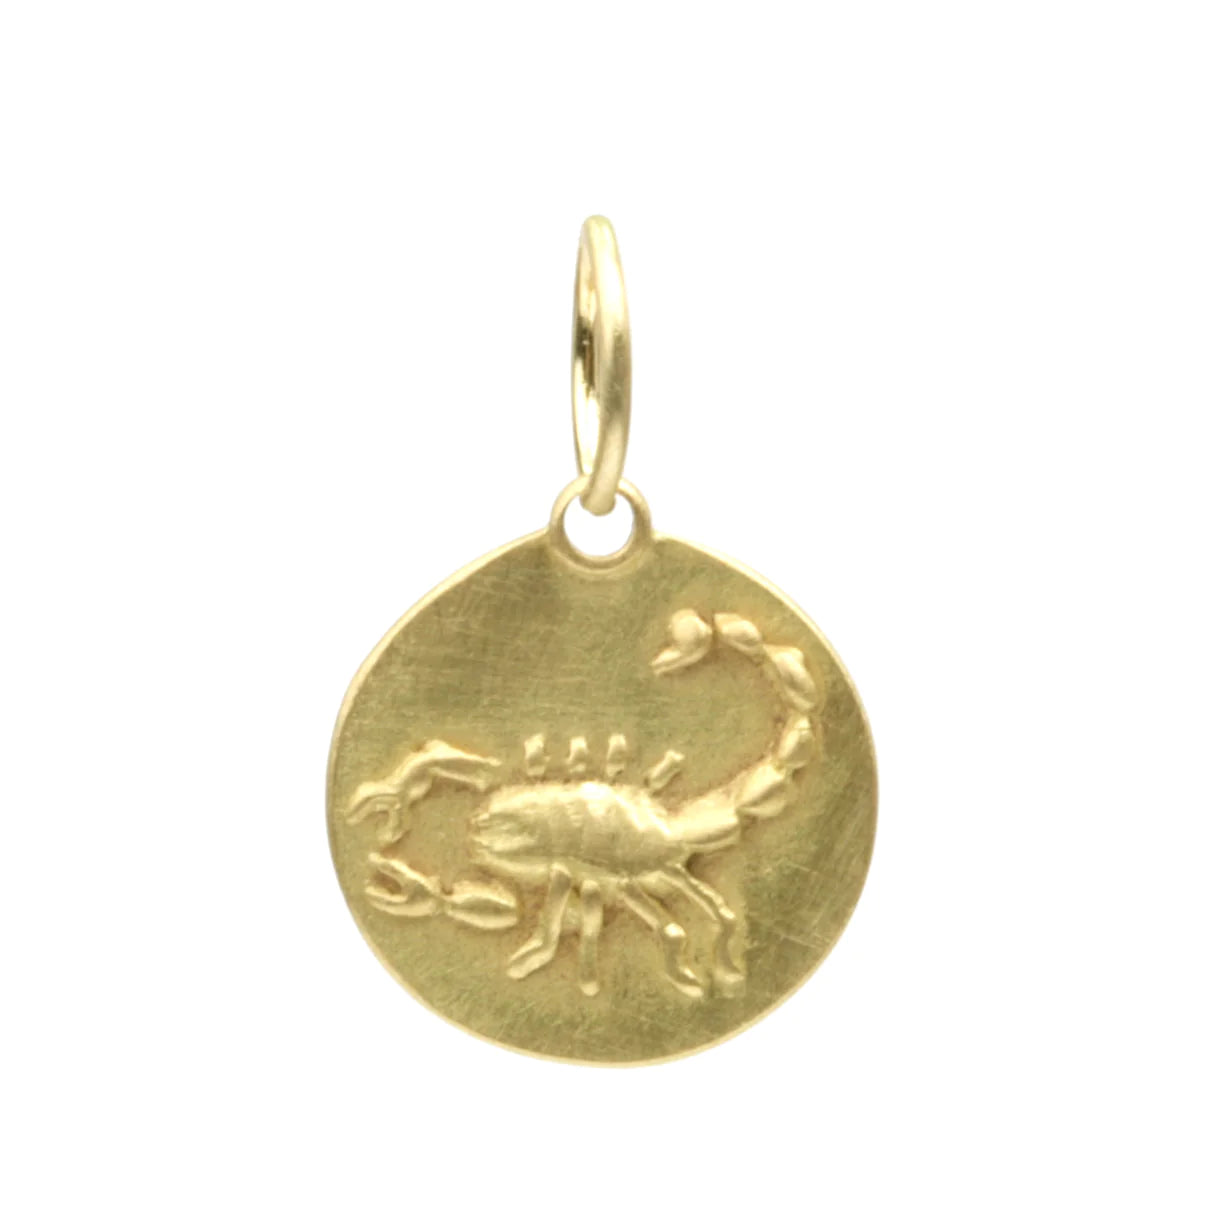 zodiac medal pendant necklace - scorpio